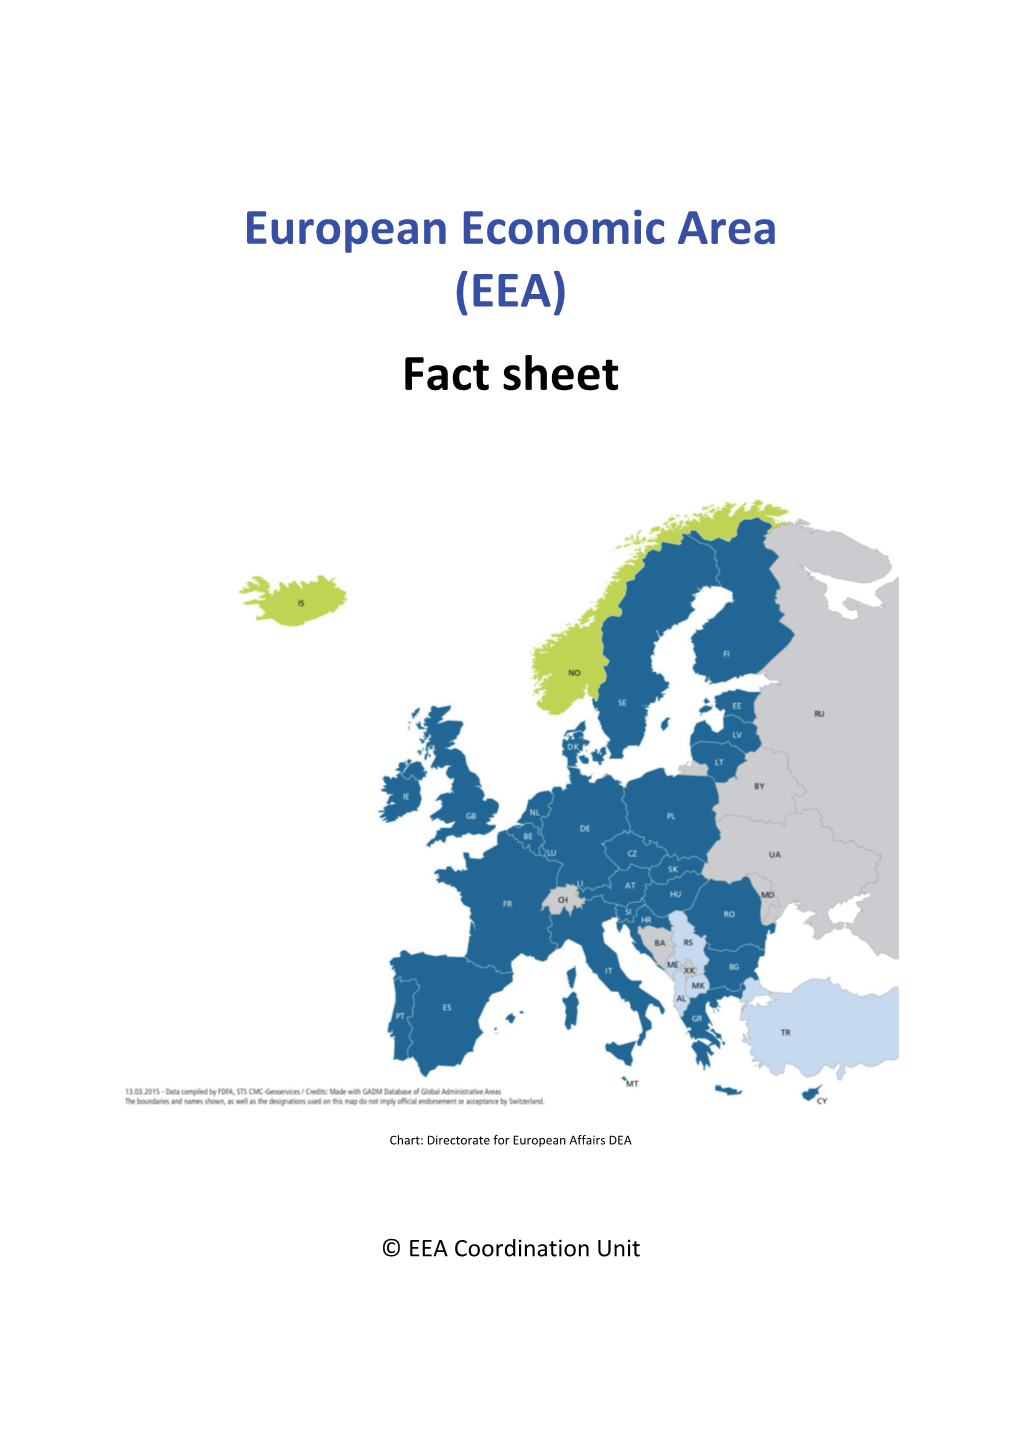 European Economic Area (EEA) Fact Sheet